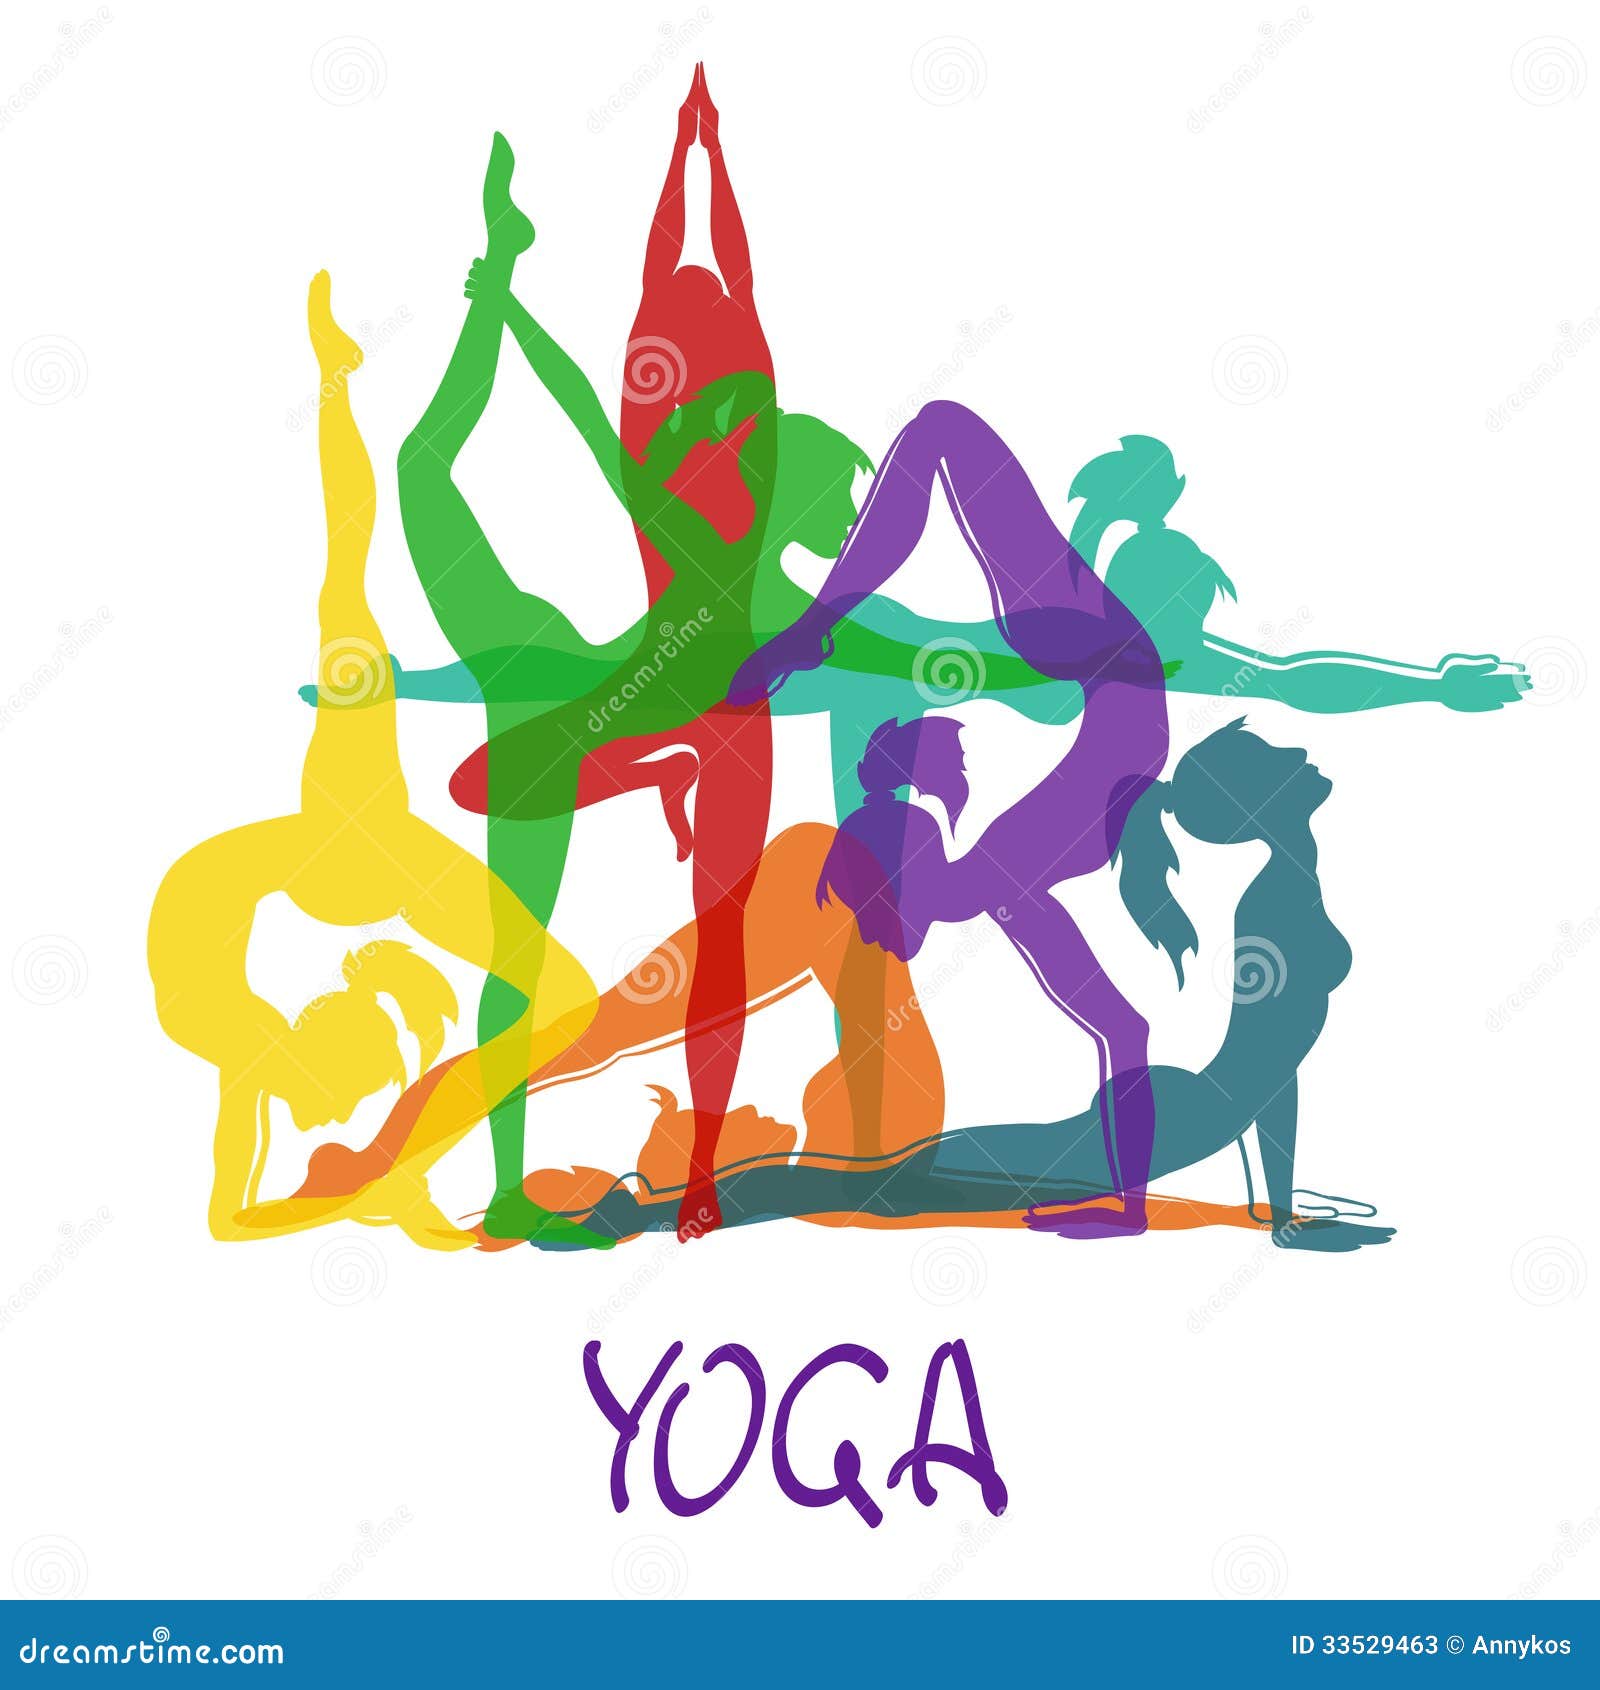 yoga clipart free silhouettes - photo #33